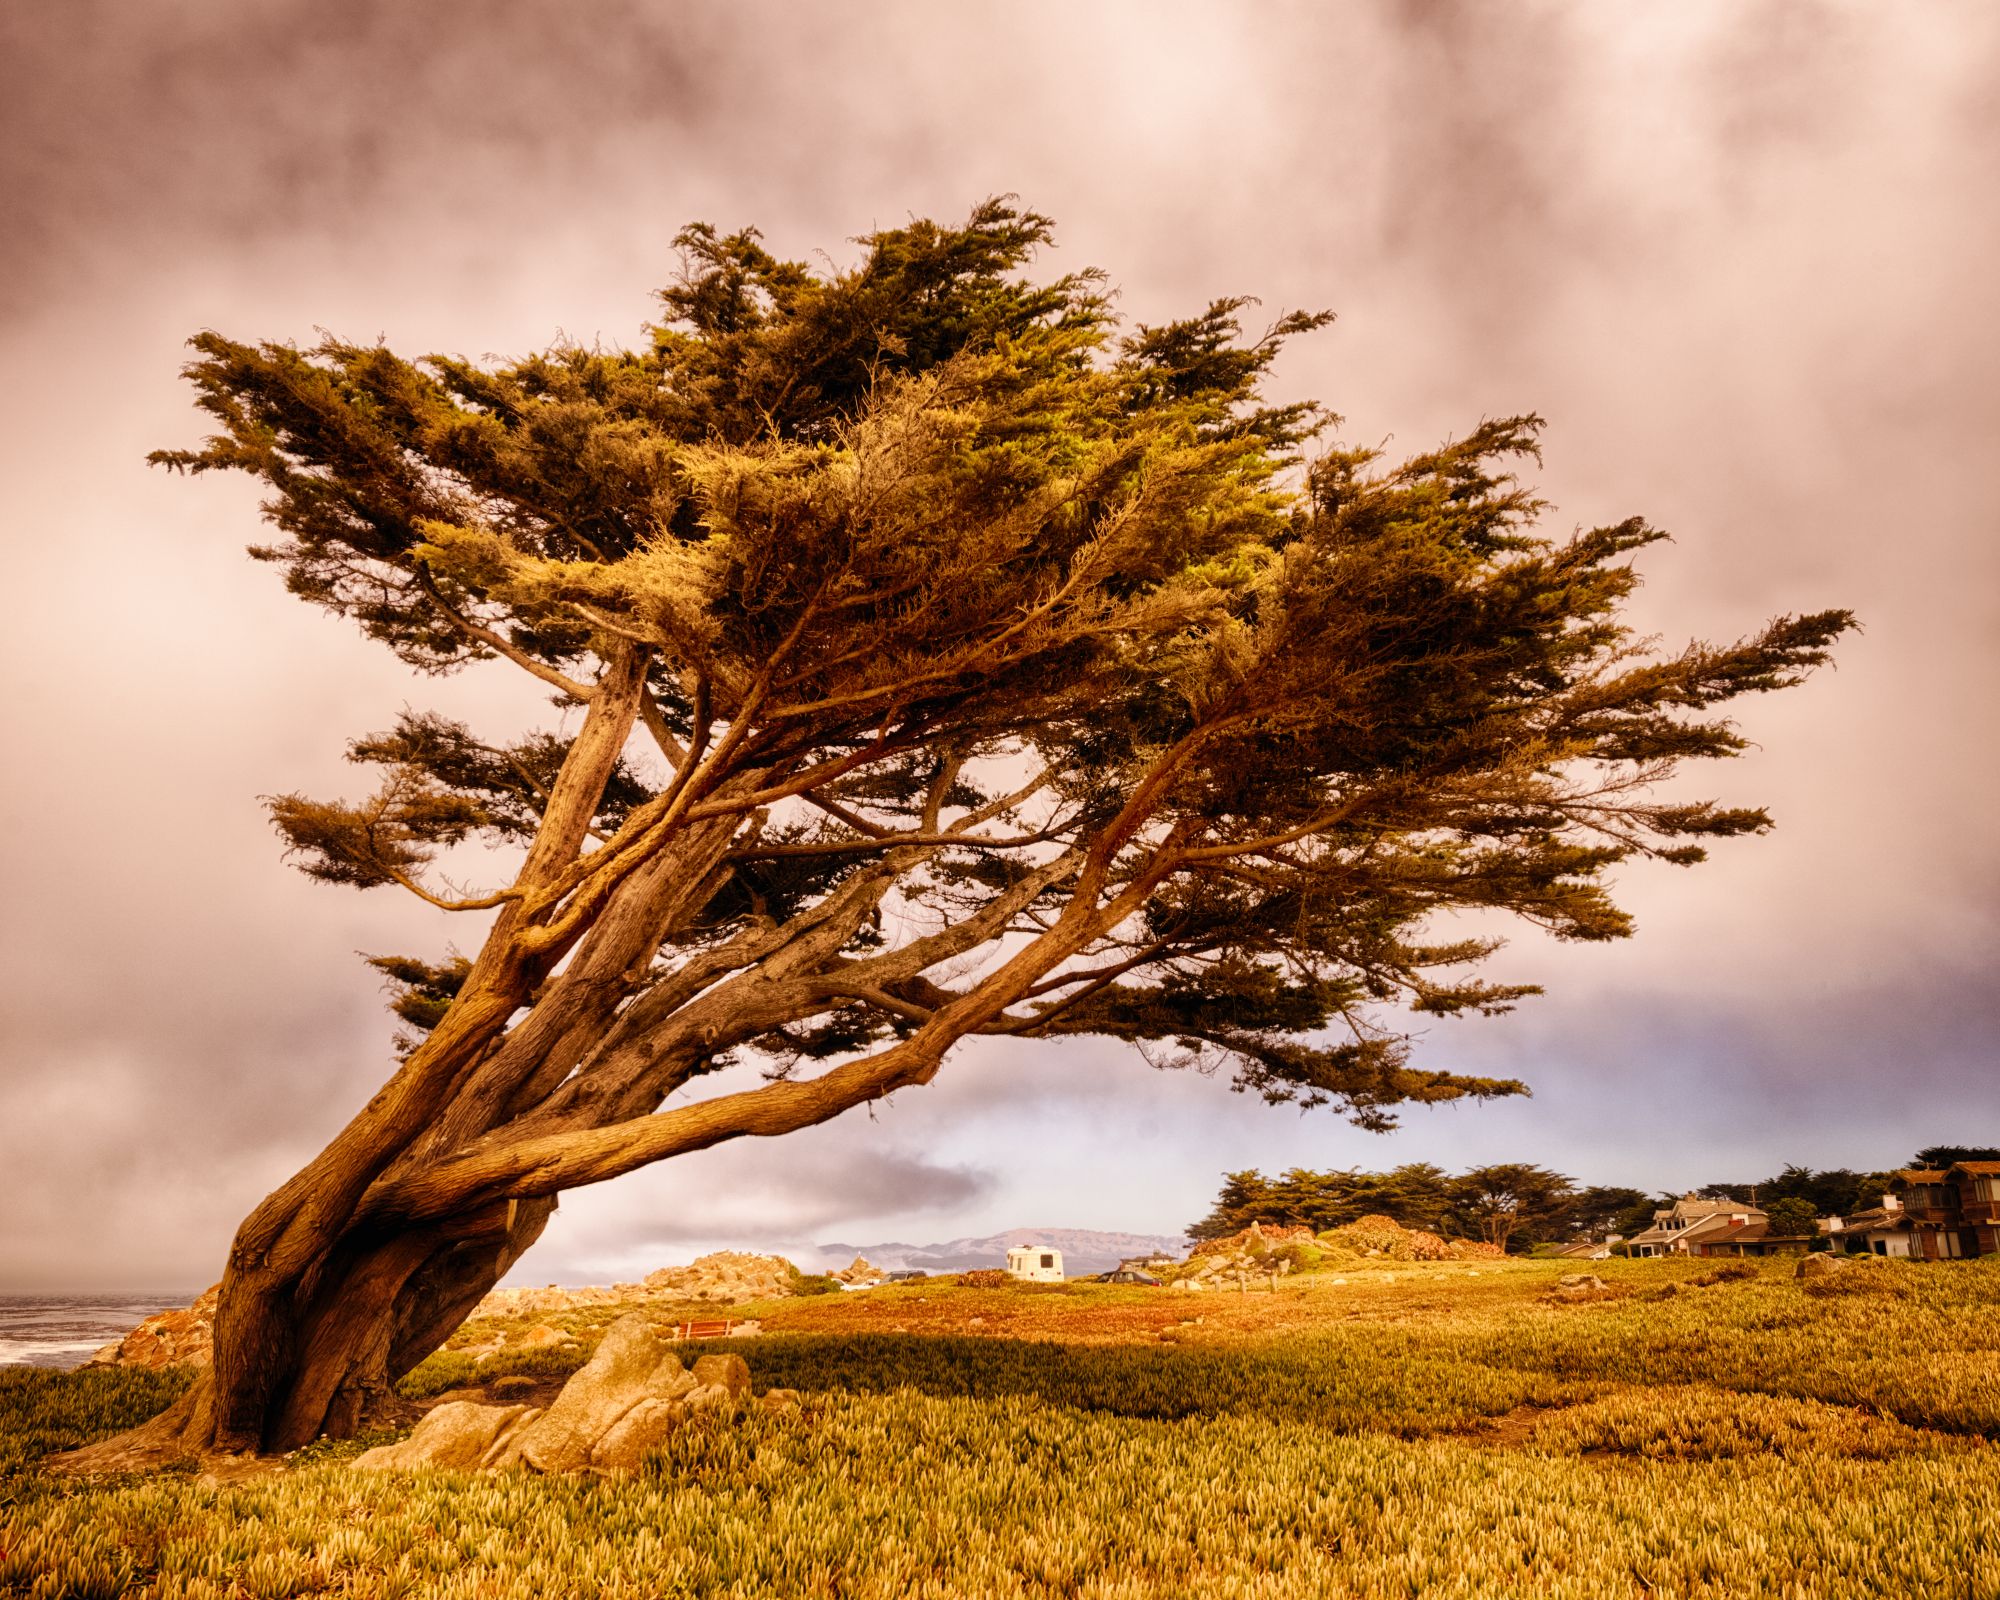 Tree of Pacific Grove